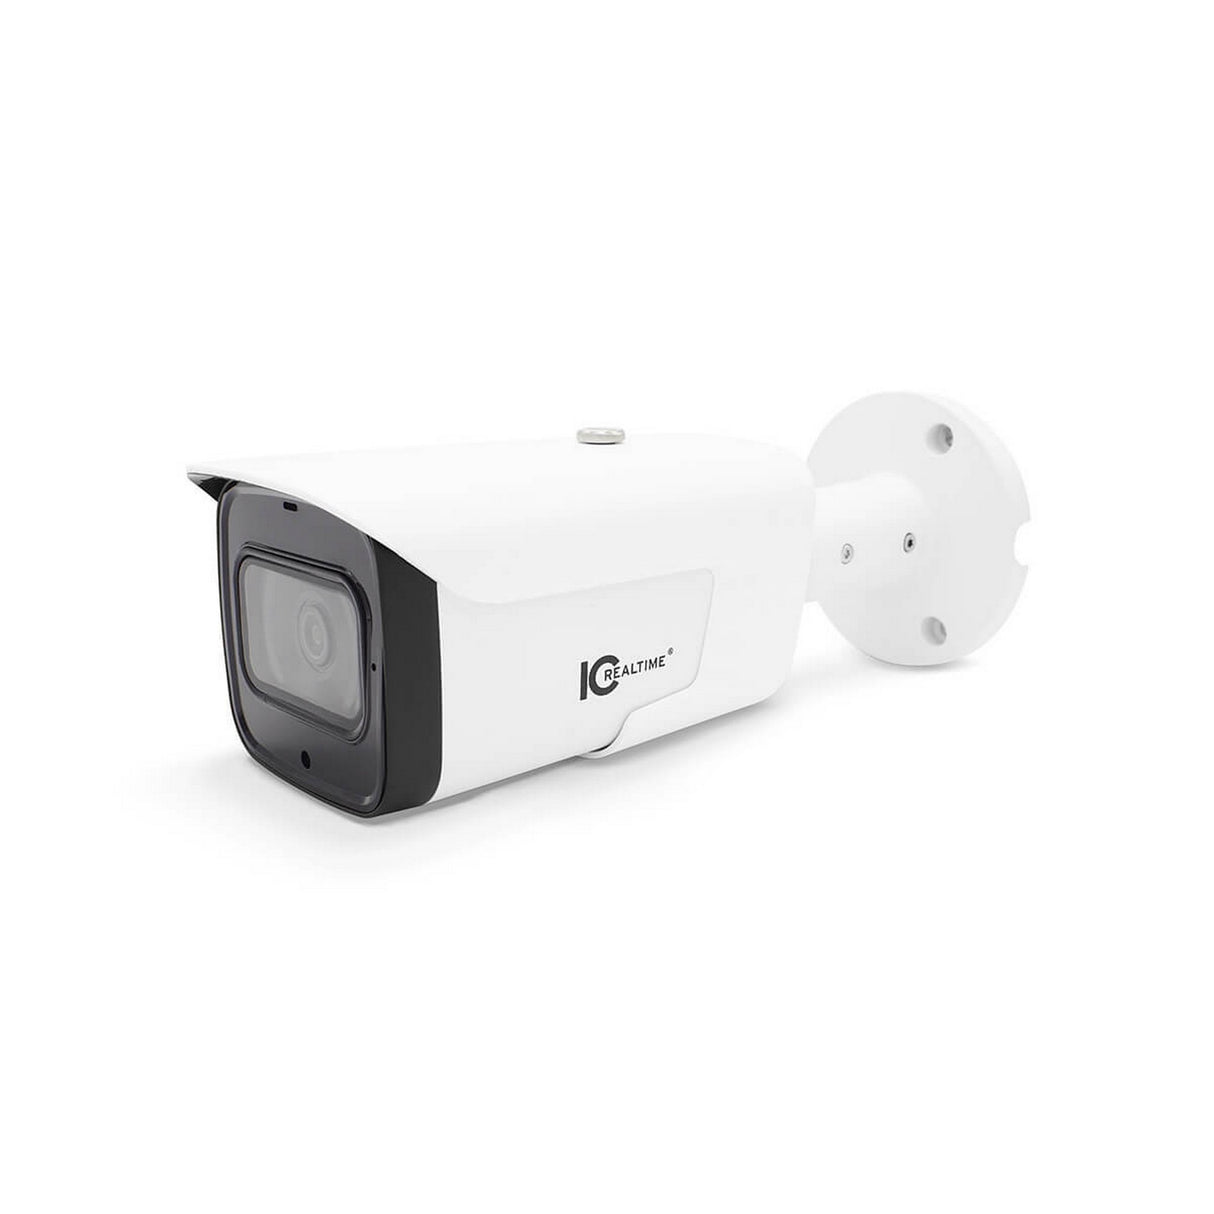 IC Realtime IPFX-B80V-IRW1 8MP IP Indoor/Outdoor Mid Size Bullet Camera, White